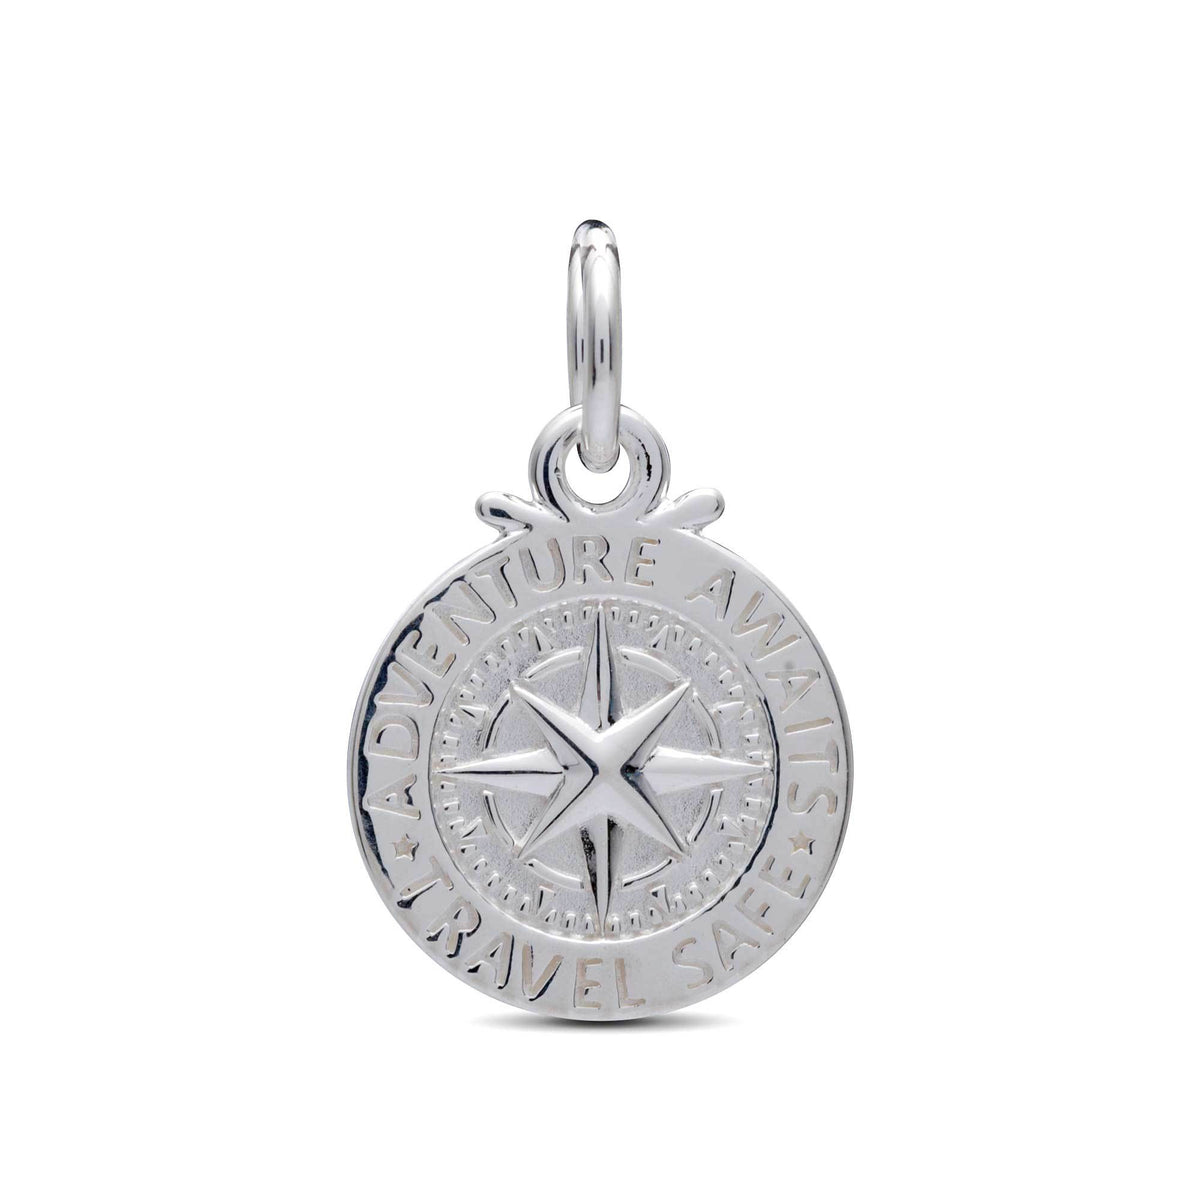 personalised travel safe alternative saint christopher silver charm for bracelets or necklace